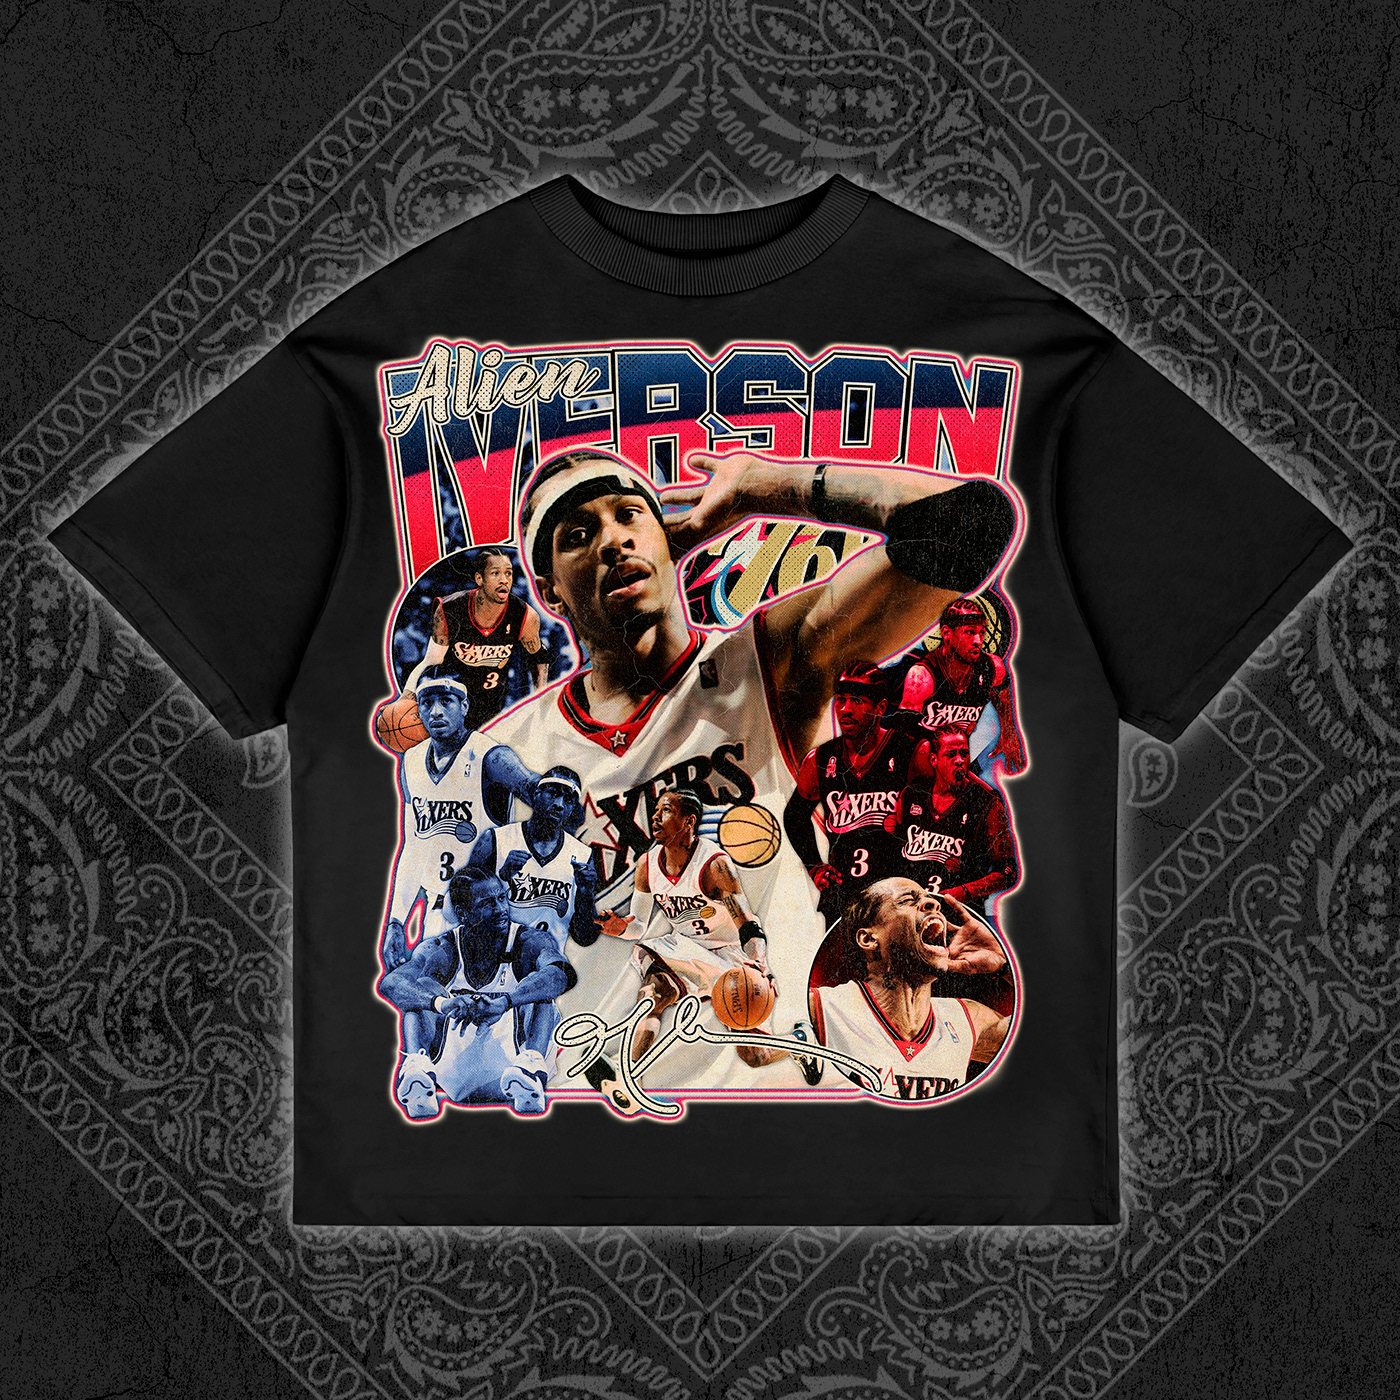 Bootleg Design bootleg tee tshirt vintage Iverson basketball 76ers Alien Iverson booteleg NBA